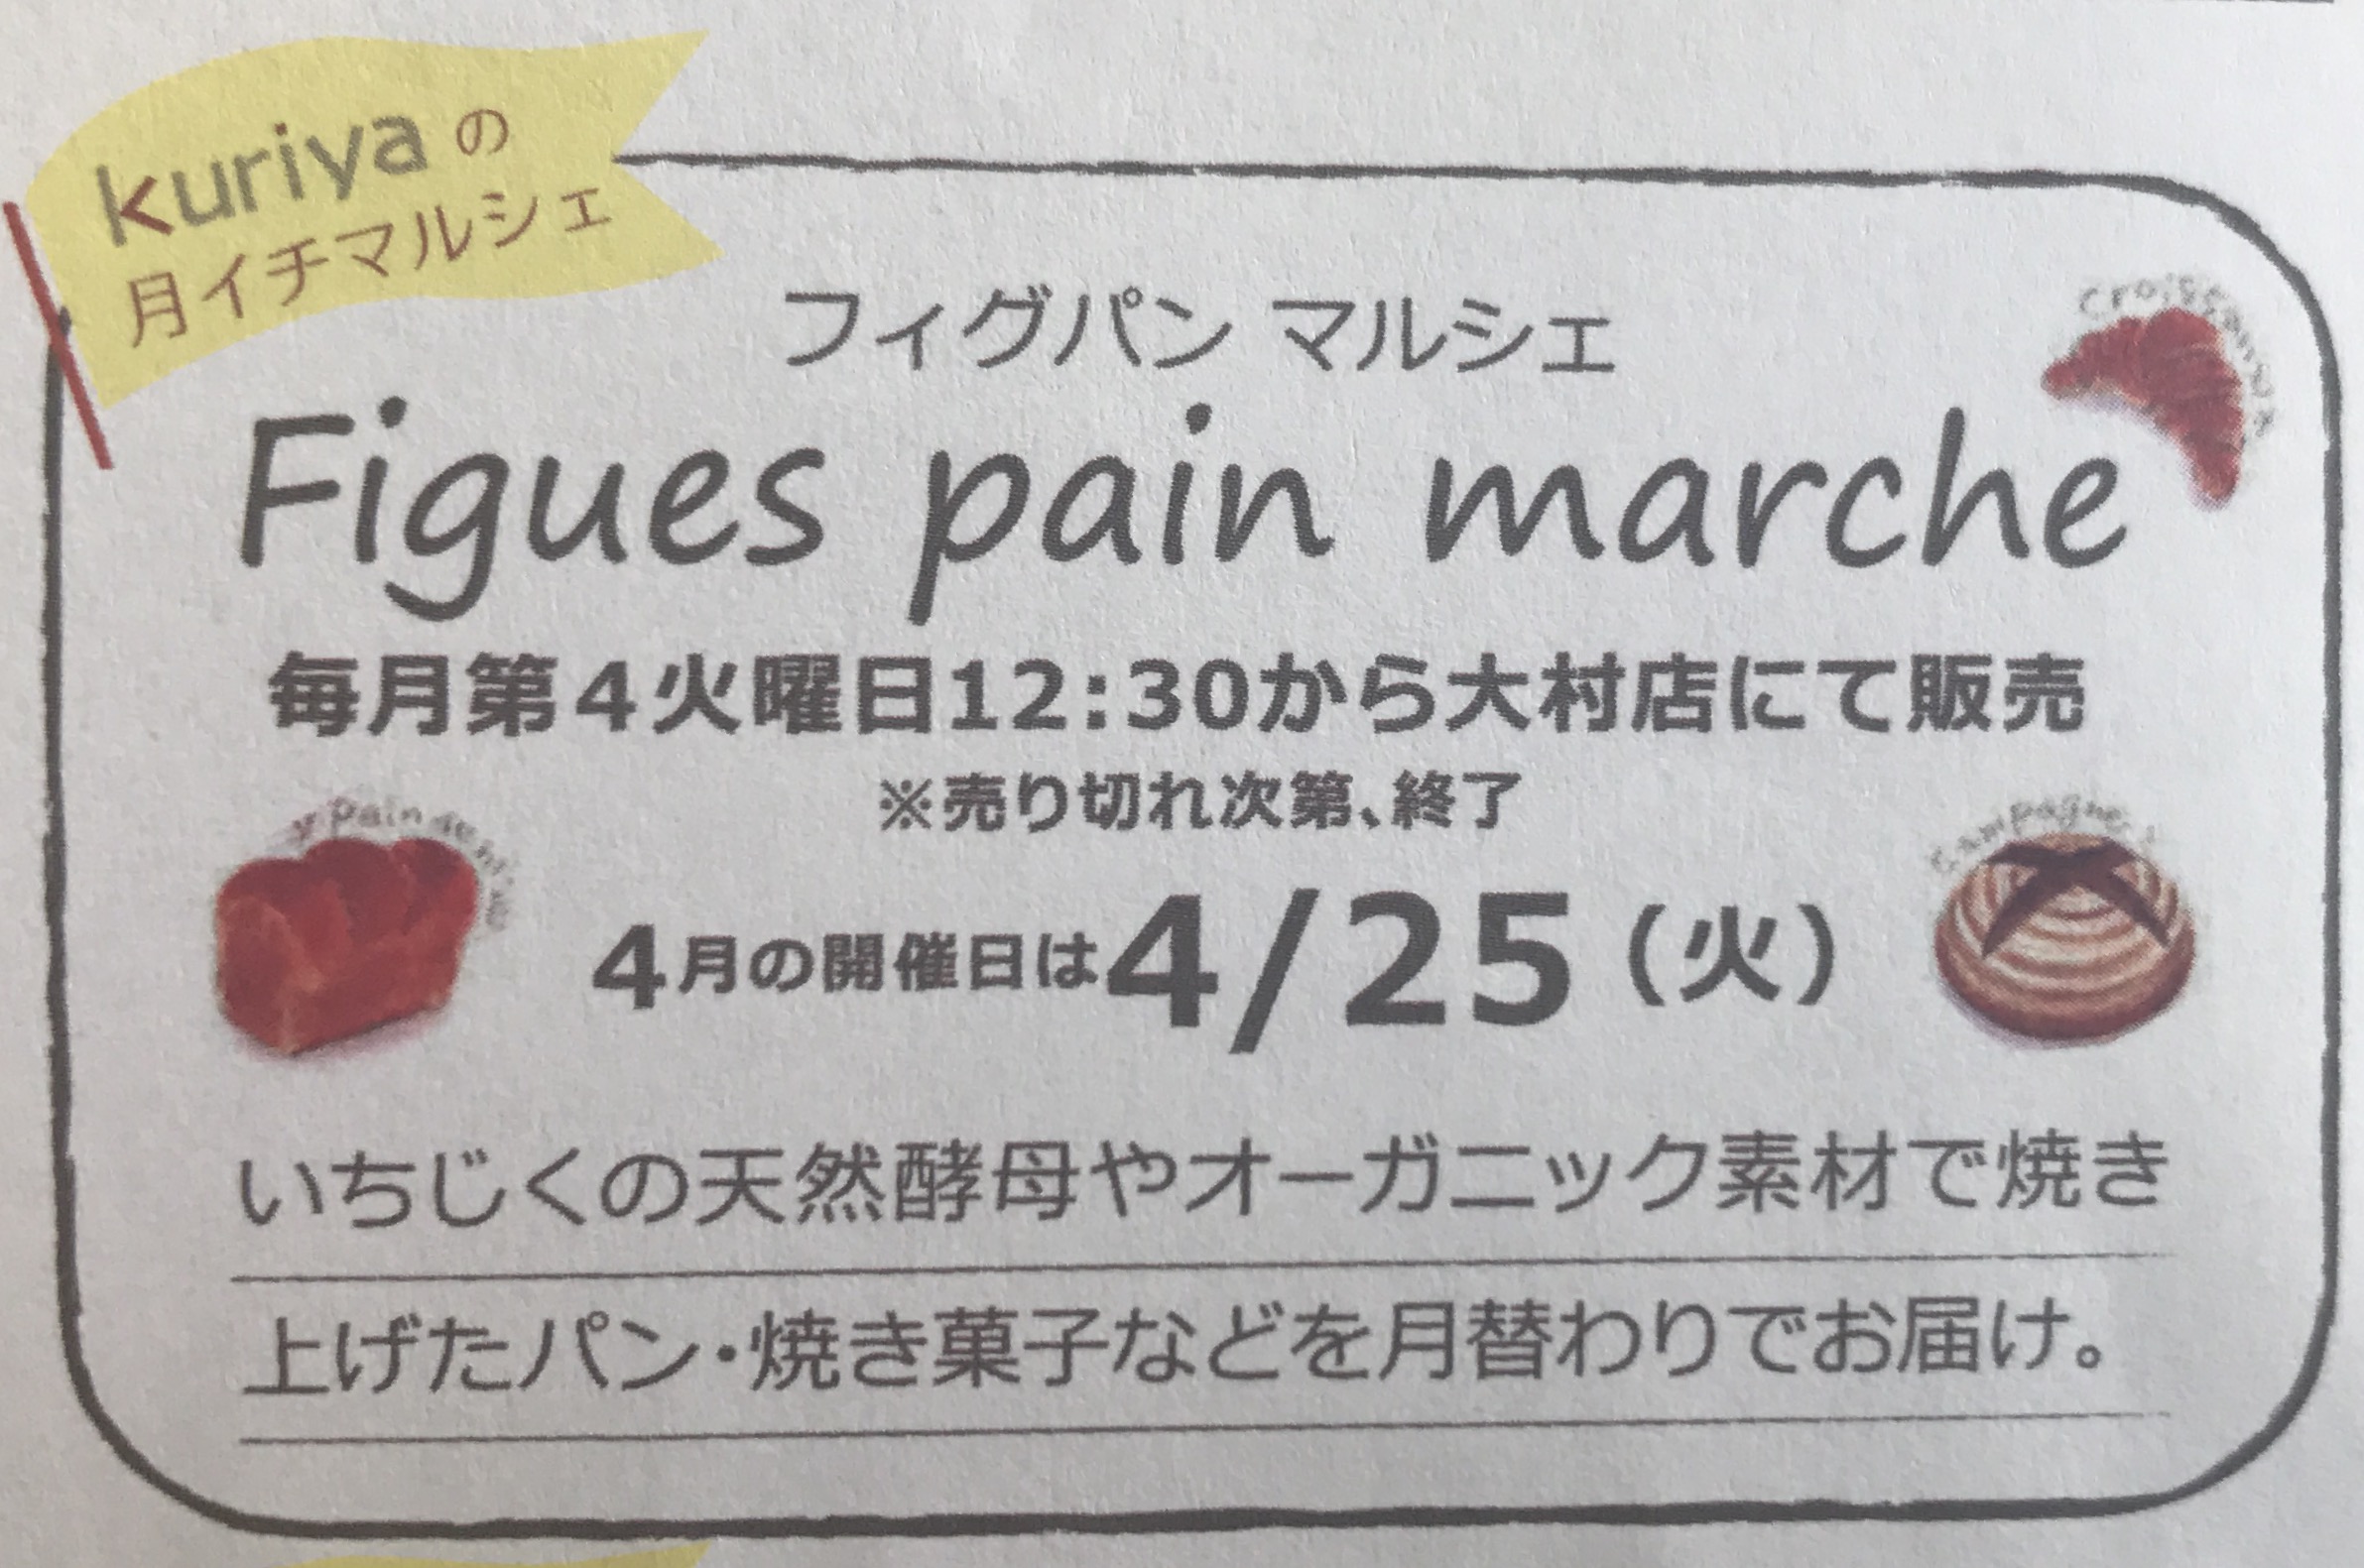 kuriya大村店　「Figues pain marche」のご案内